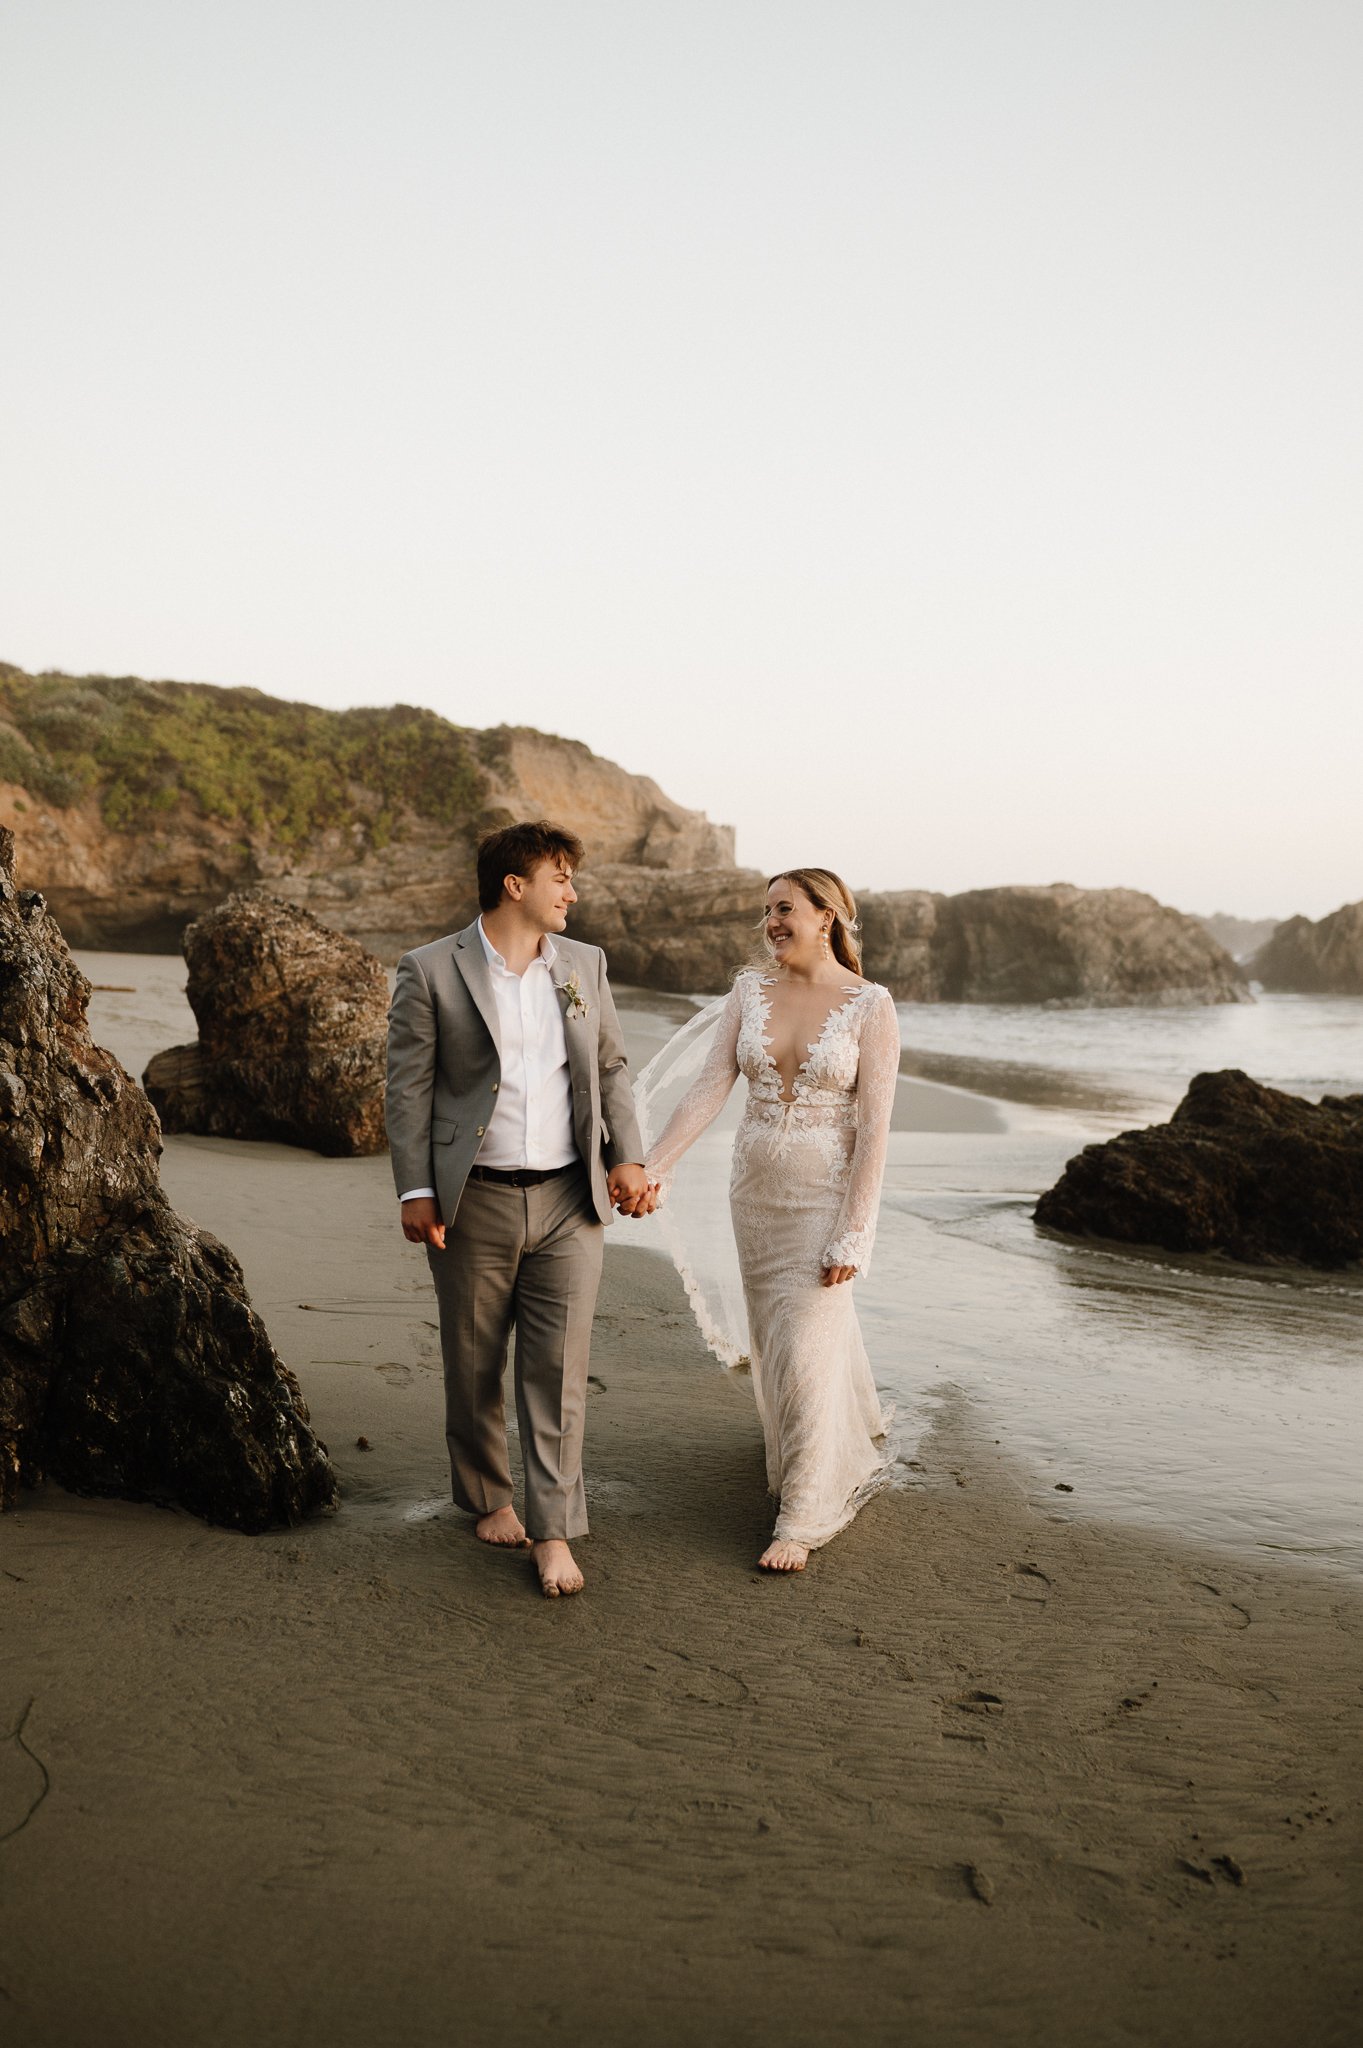 Big Sur bride and groom on walking through water on beach